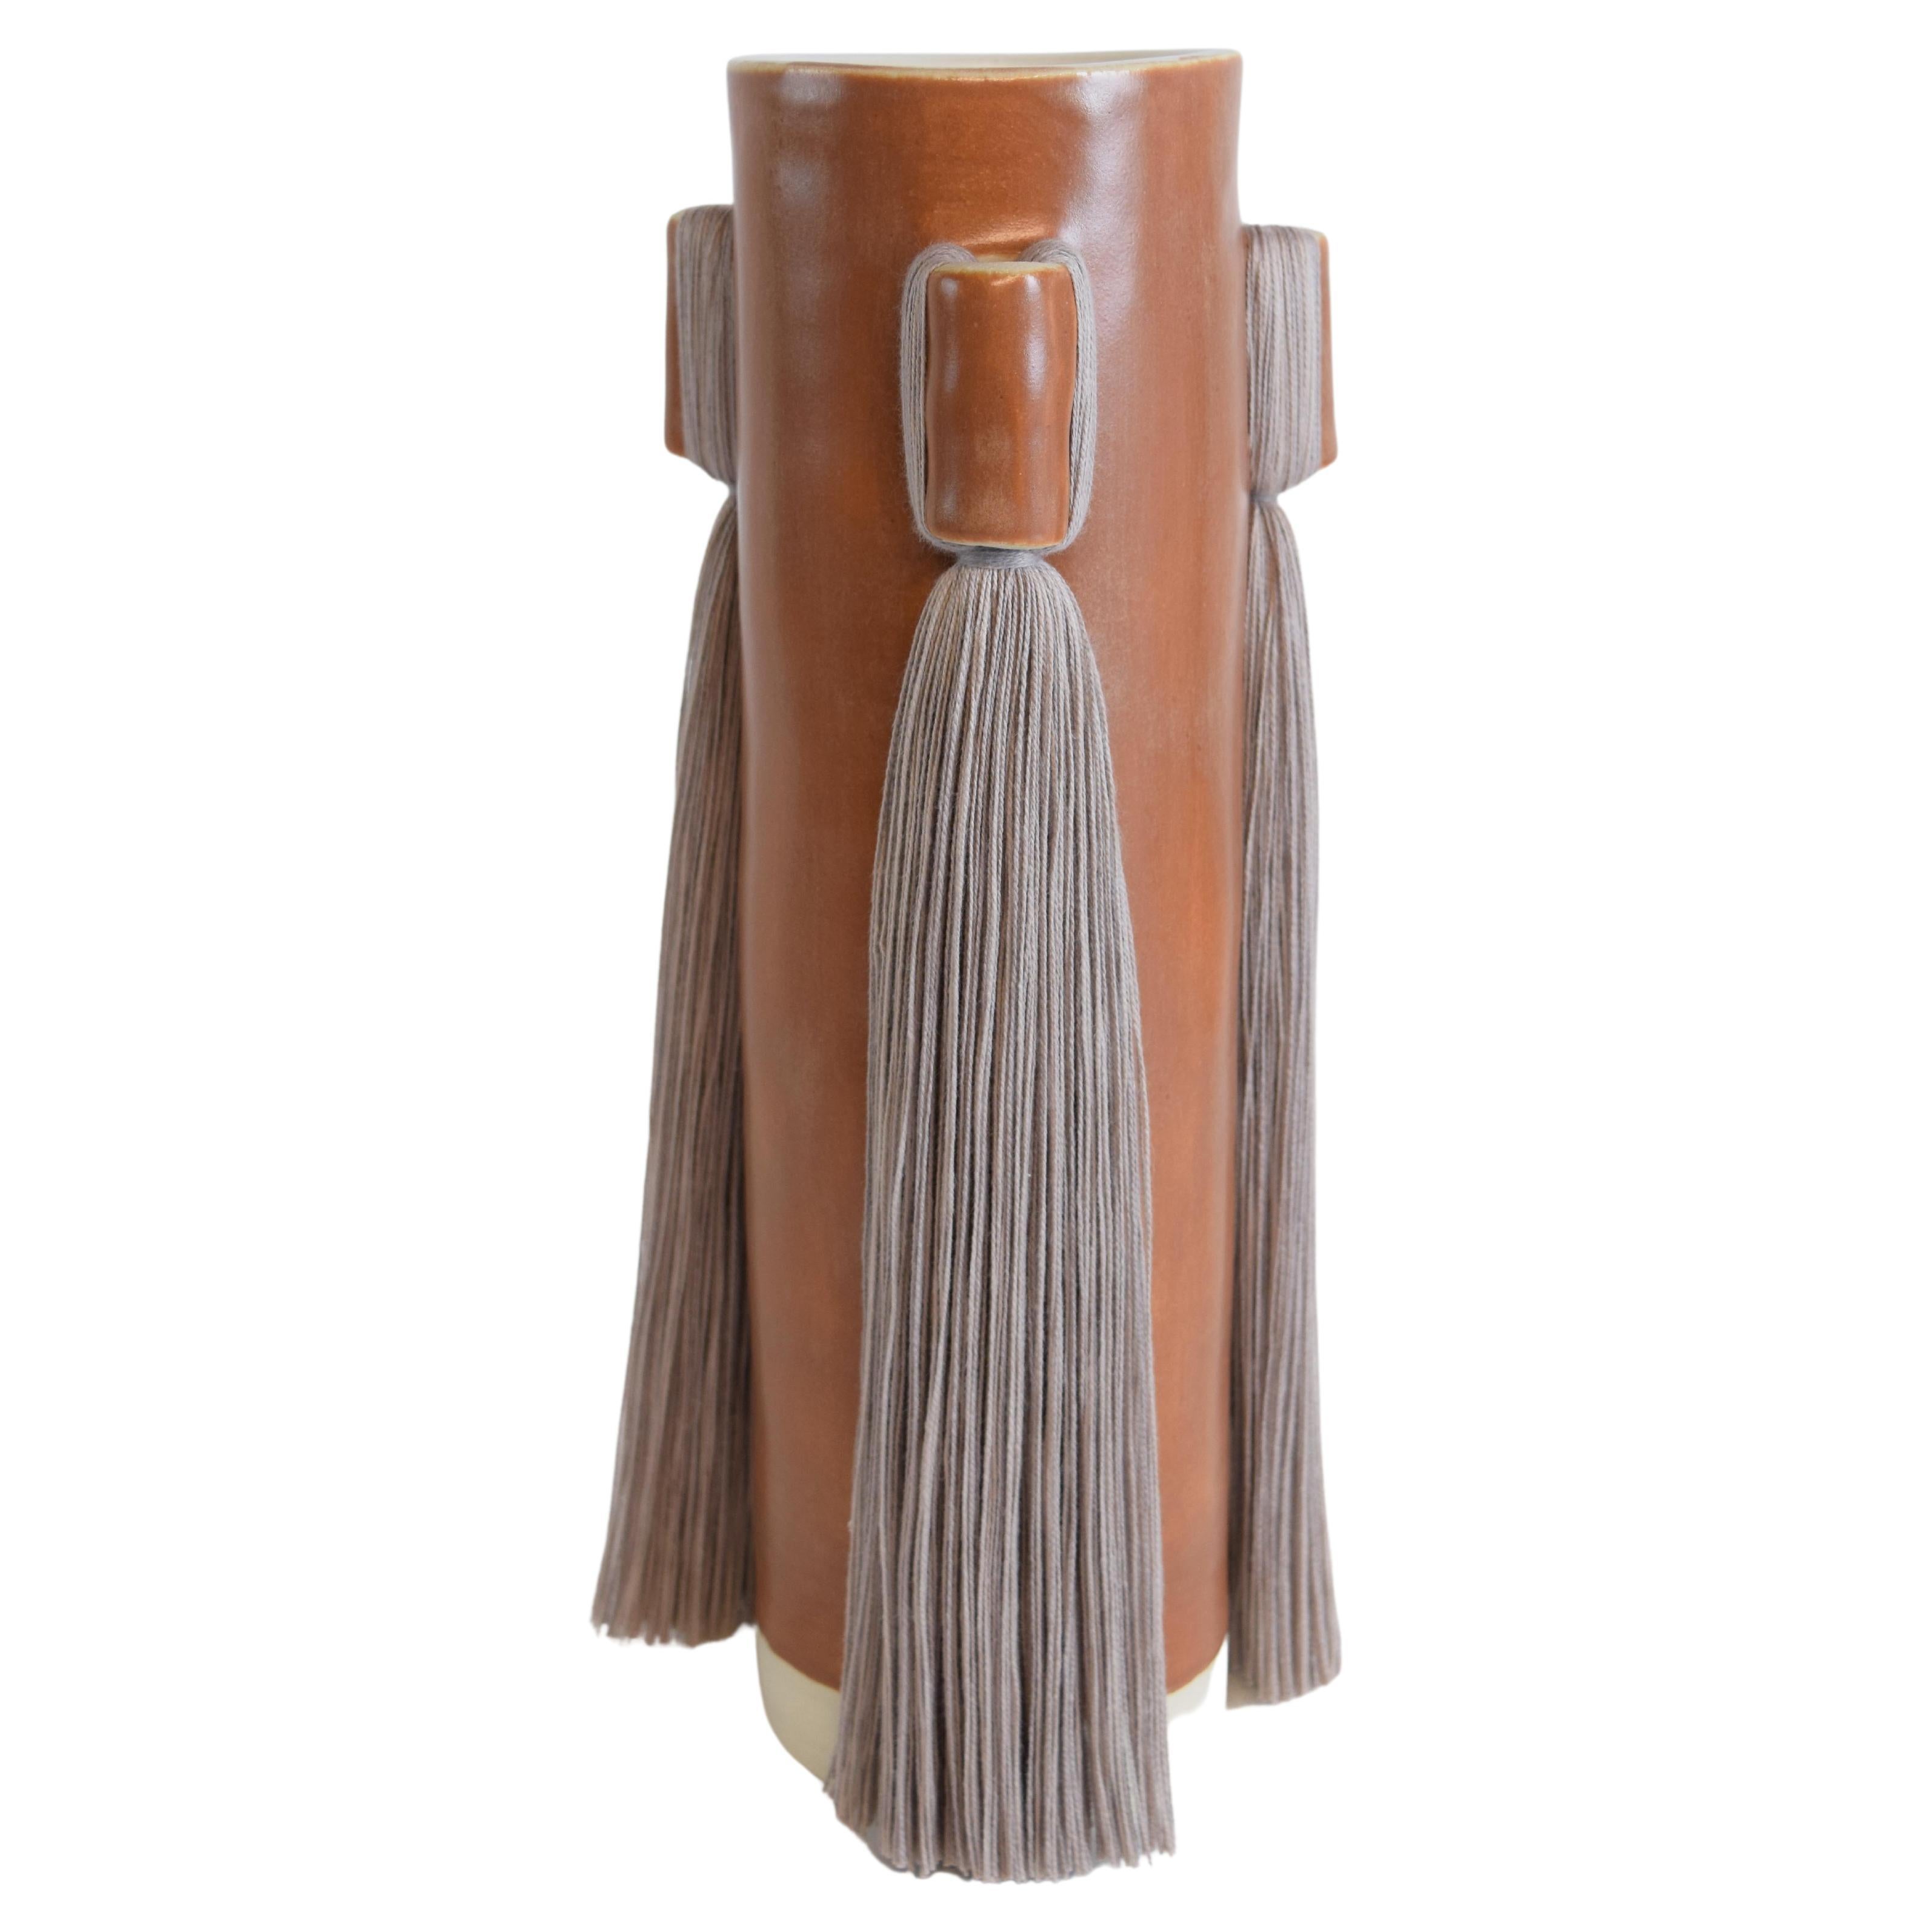 Handmade Ceramic Vase #607 in Satin Brown Glaze with Gray Cotton Fringe Detail